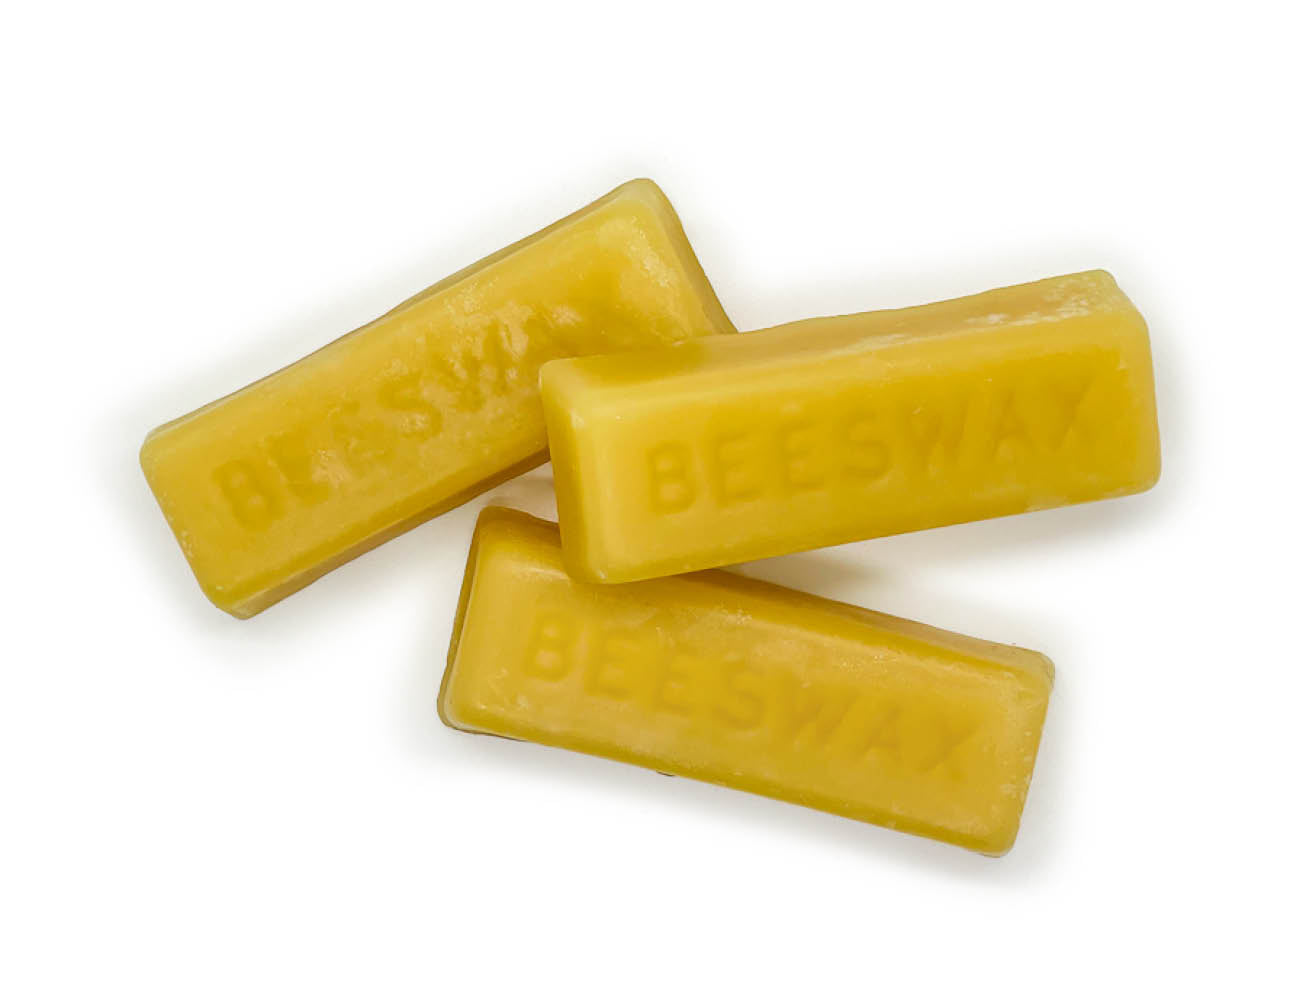 Pure Beeswax 1 oz Blocks - Olivarez Chico Honey